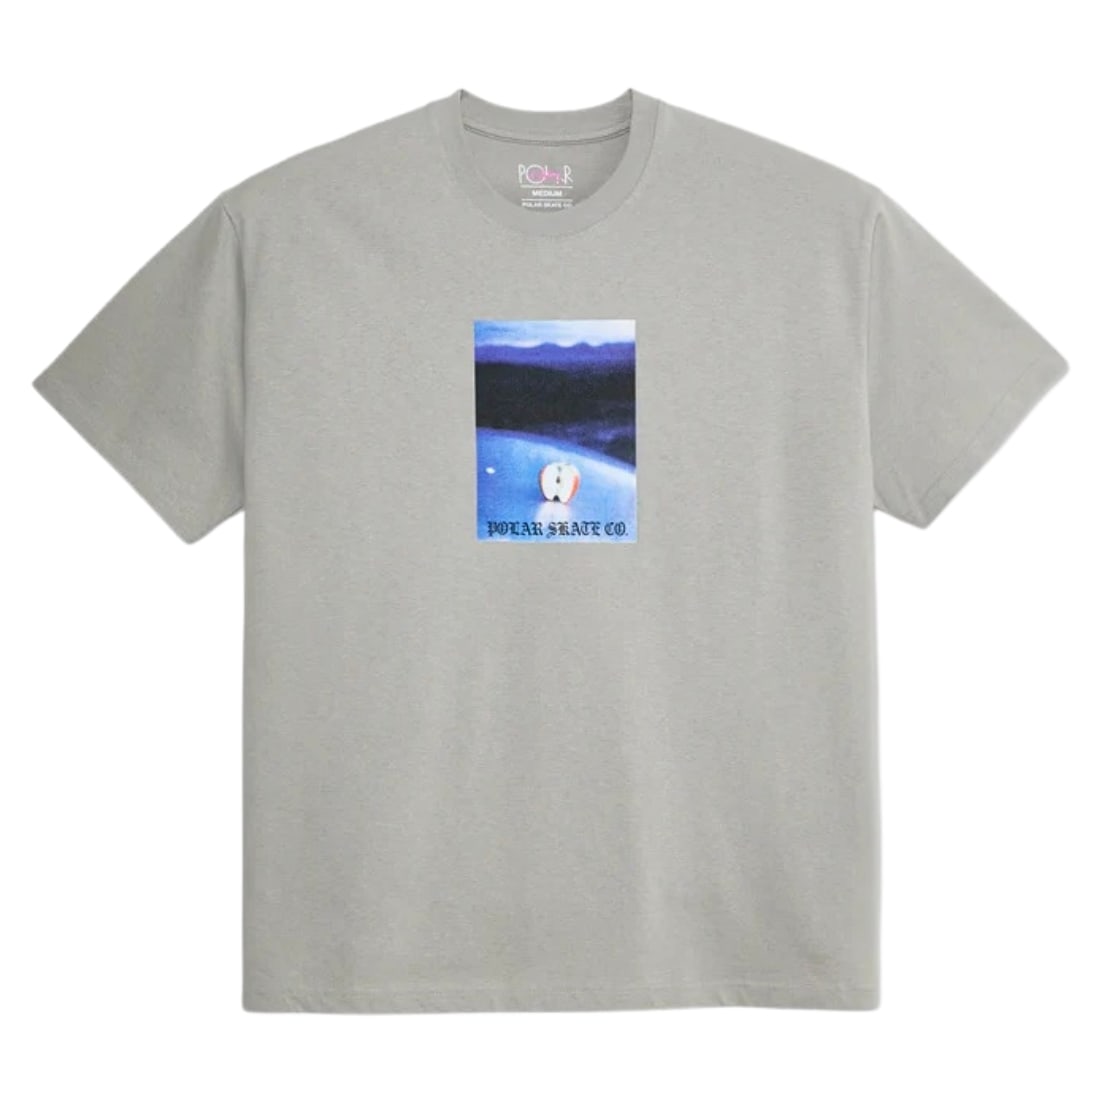 Polar Core T-Shirt - Silver - Mens Graphic T-Shirt by Polar